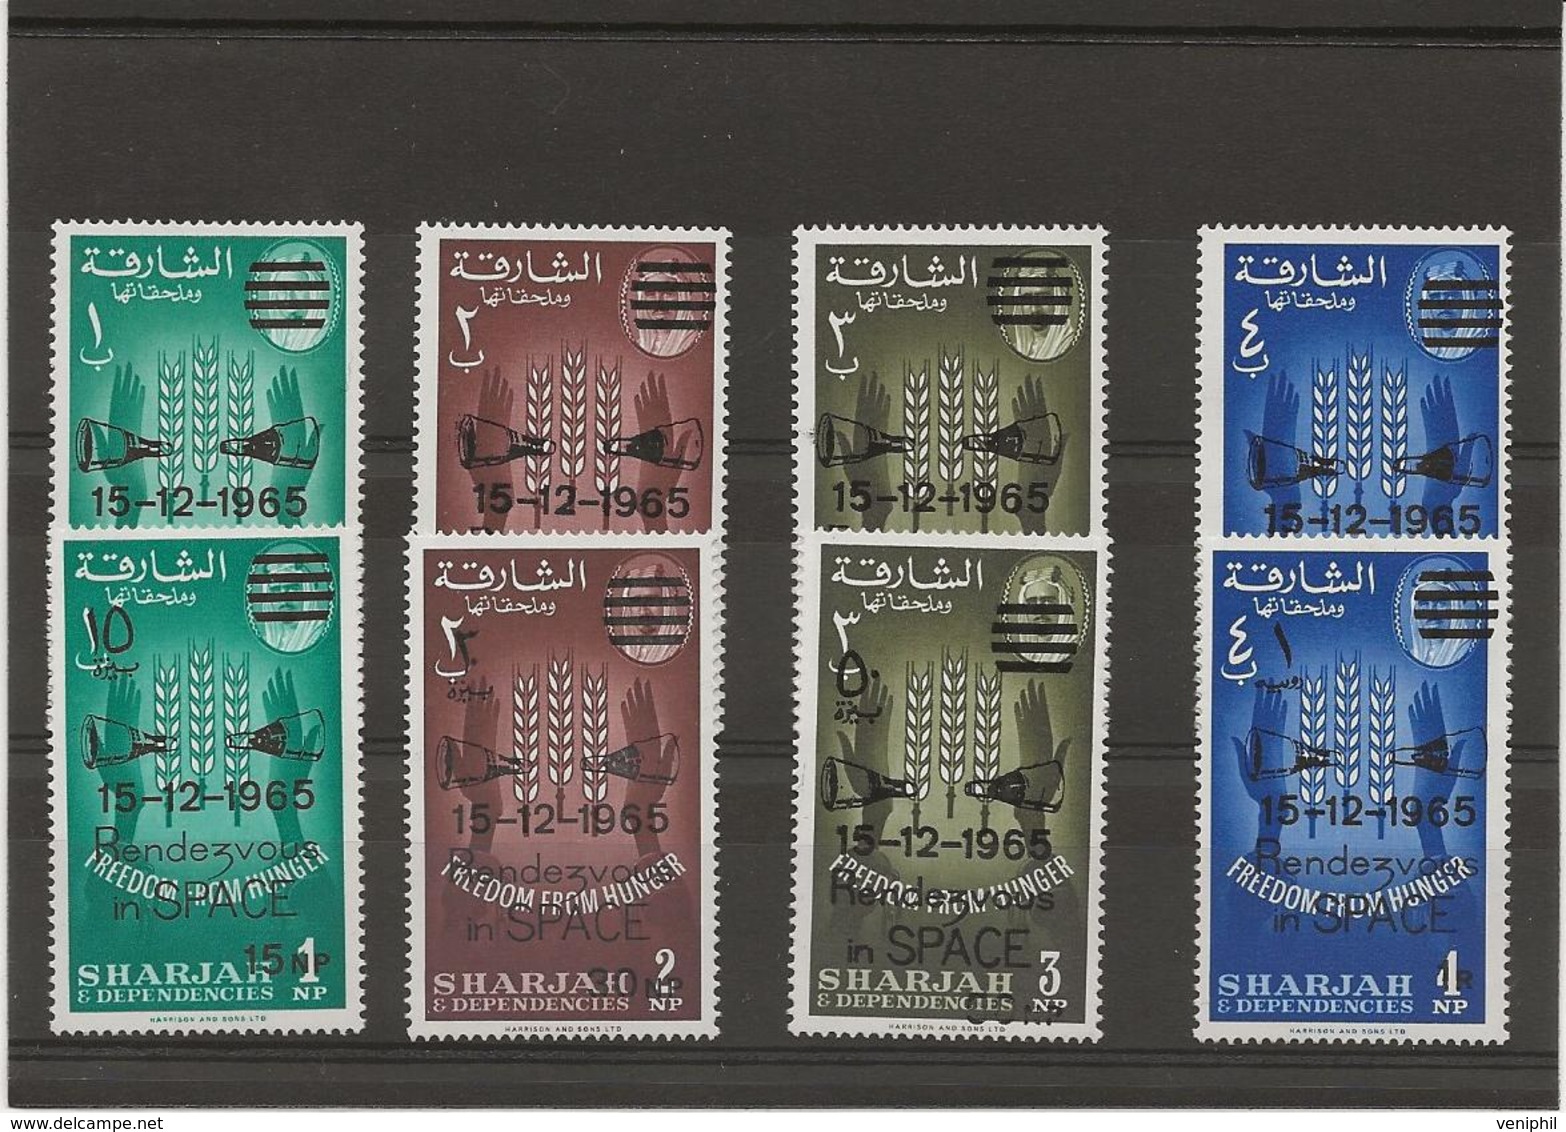 SHARJAH - EMIRATS ARABES UNIS - N° 133 A 140 -NEUF SANS CHARNIERE -ANNEE 1965 - Sharjah